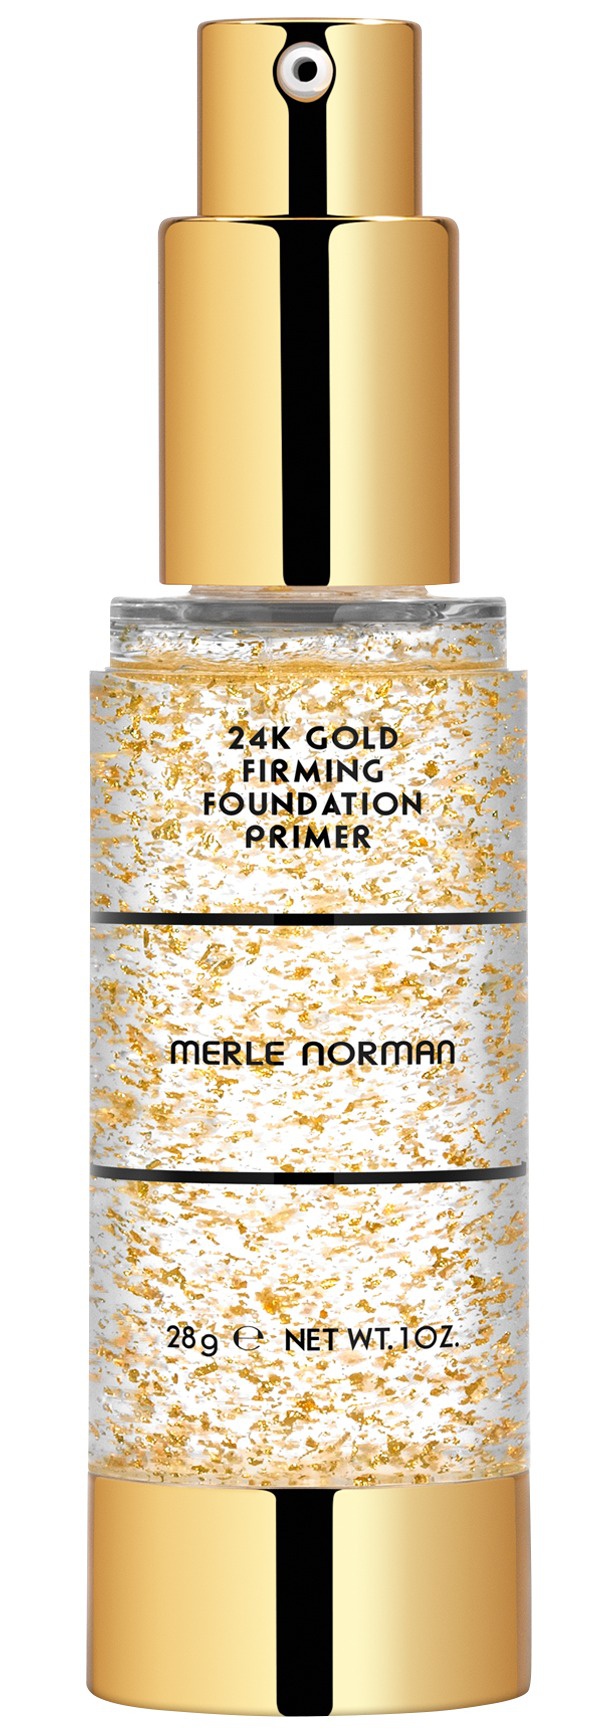 Merle Norman 24k Gold Firming Foundation Primer